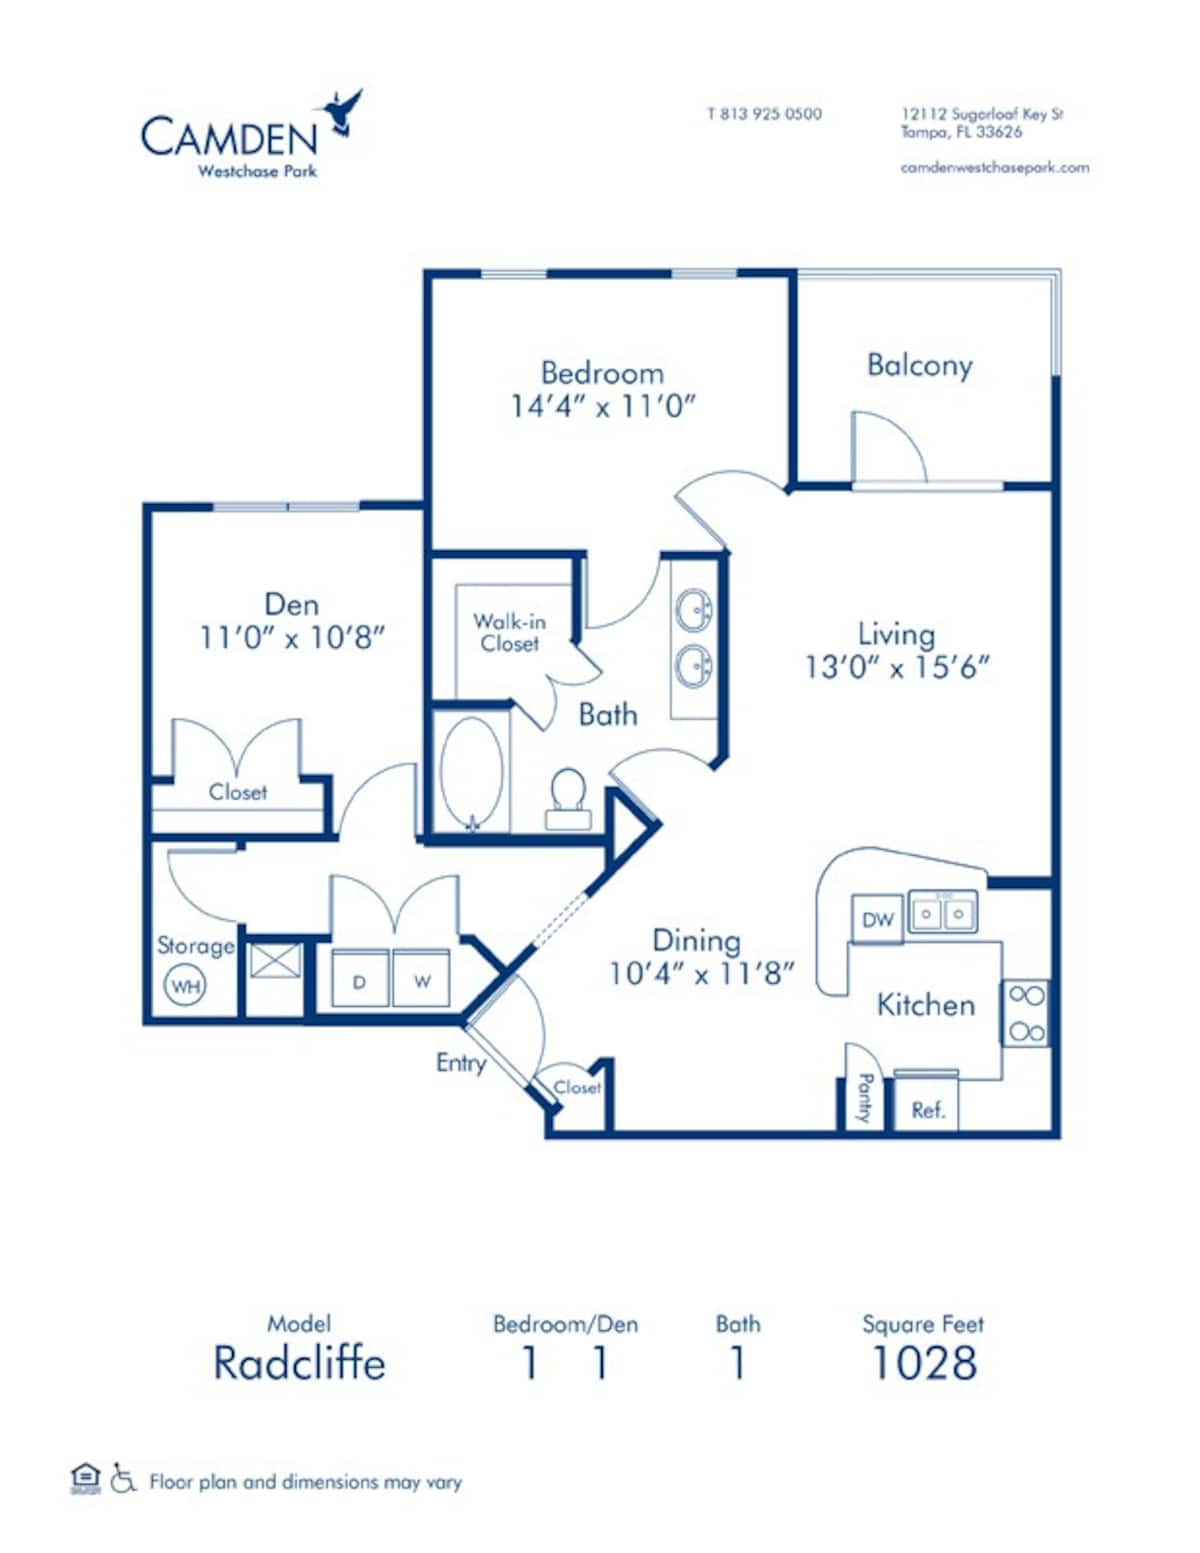 Floorplan diagram for Radcliffe, showing 1 bedroom